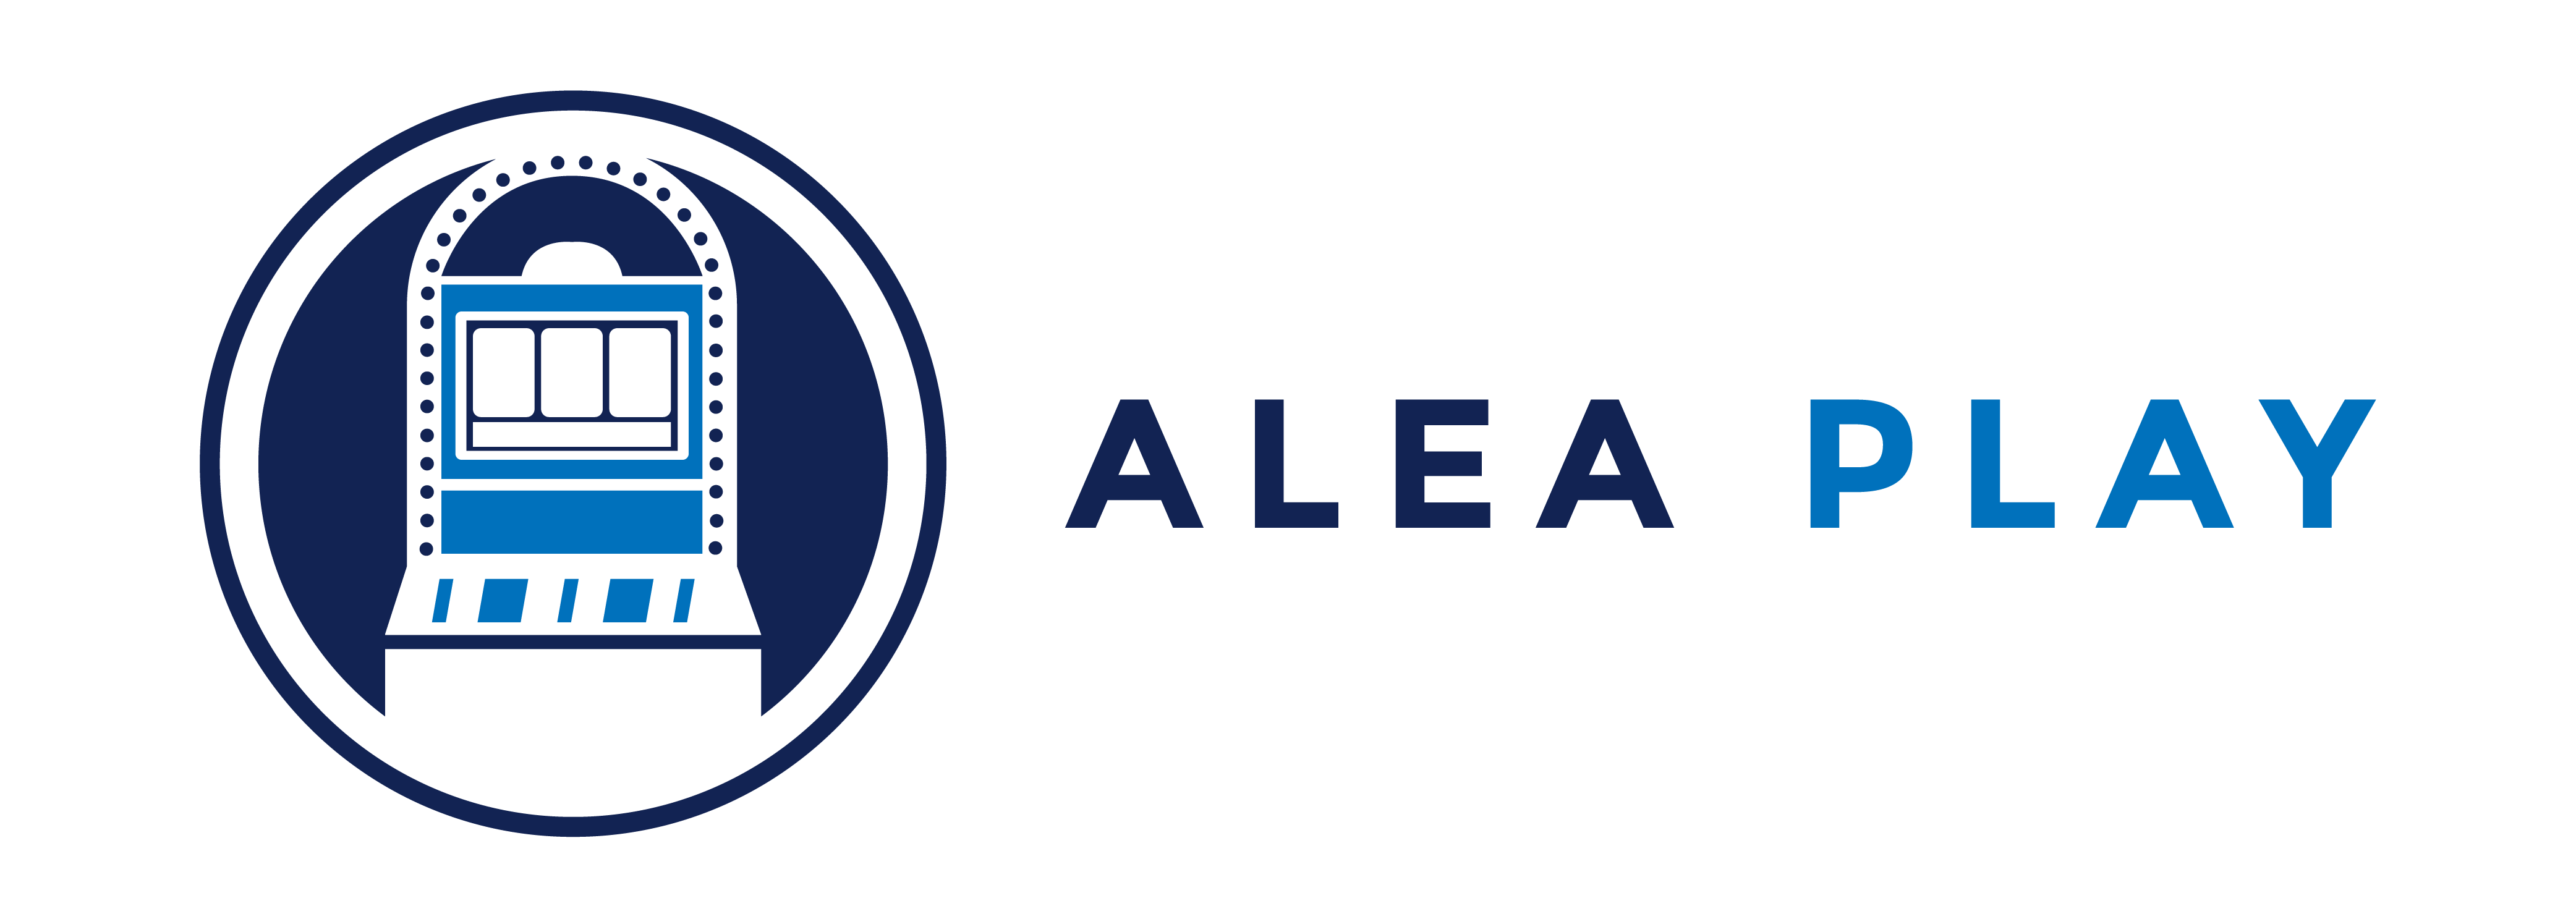 Alena Play logo